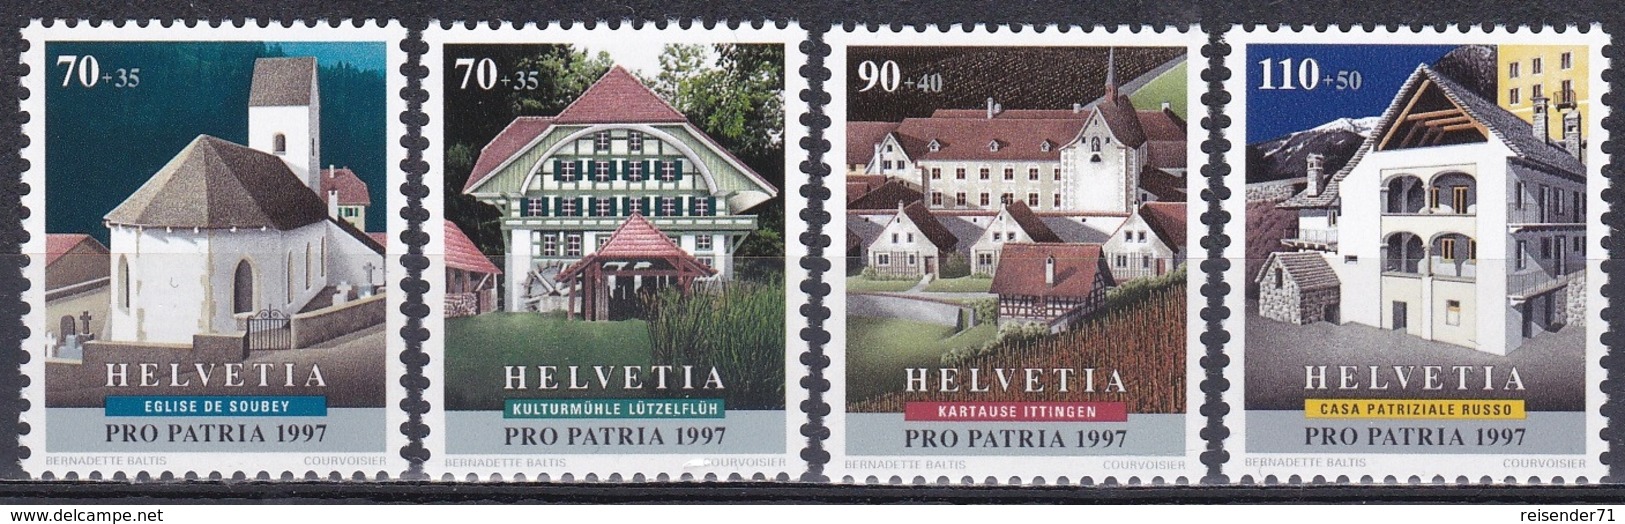 Schweiz Switzerland Helvetia 1997 Pro Patria Vaterland Kultur Culture Architektur Bauwerke Buildings, Mi. 1611-4 ** - Unused Stamps